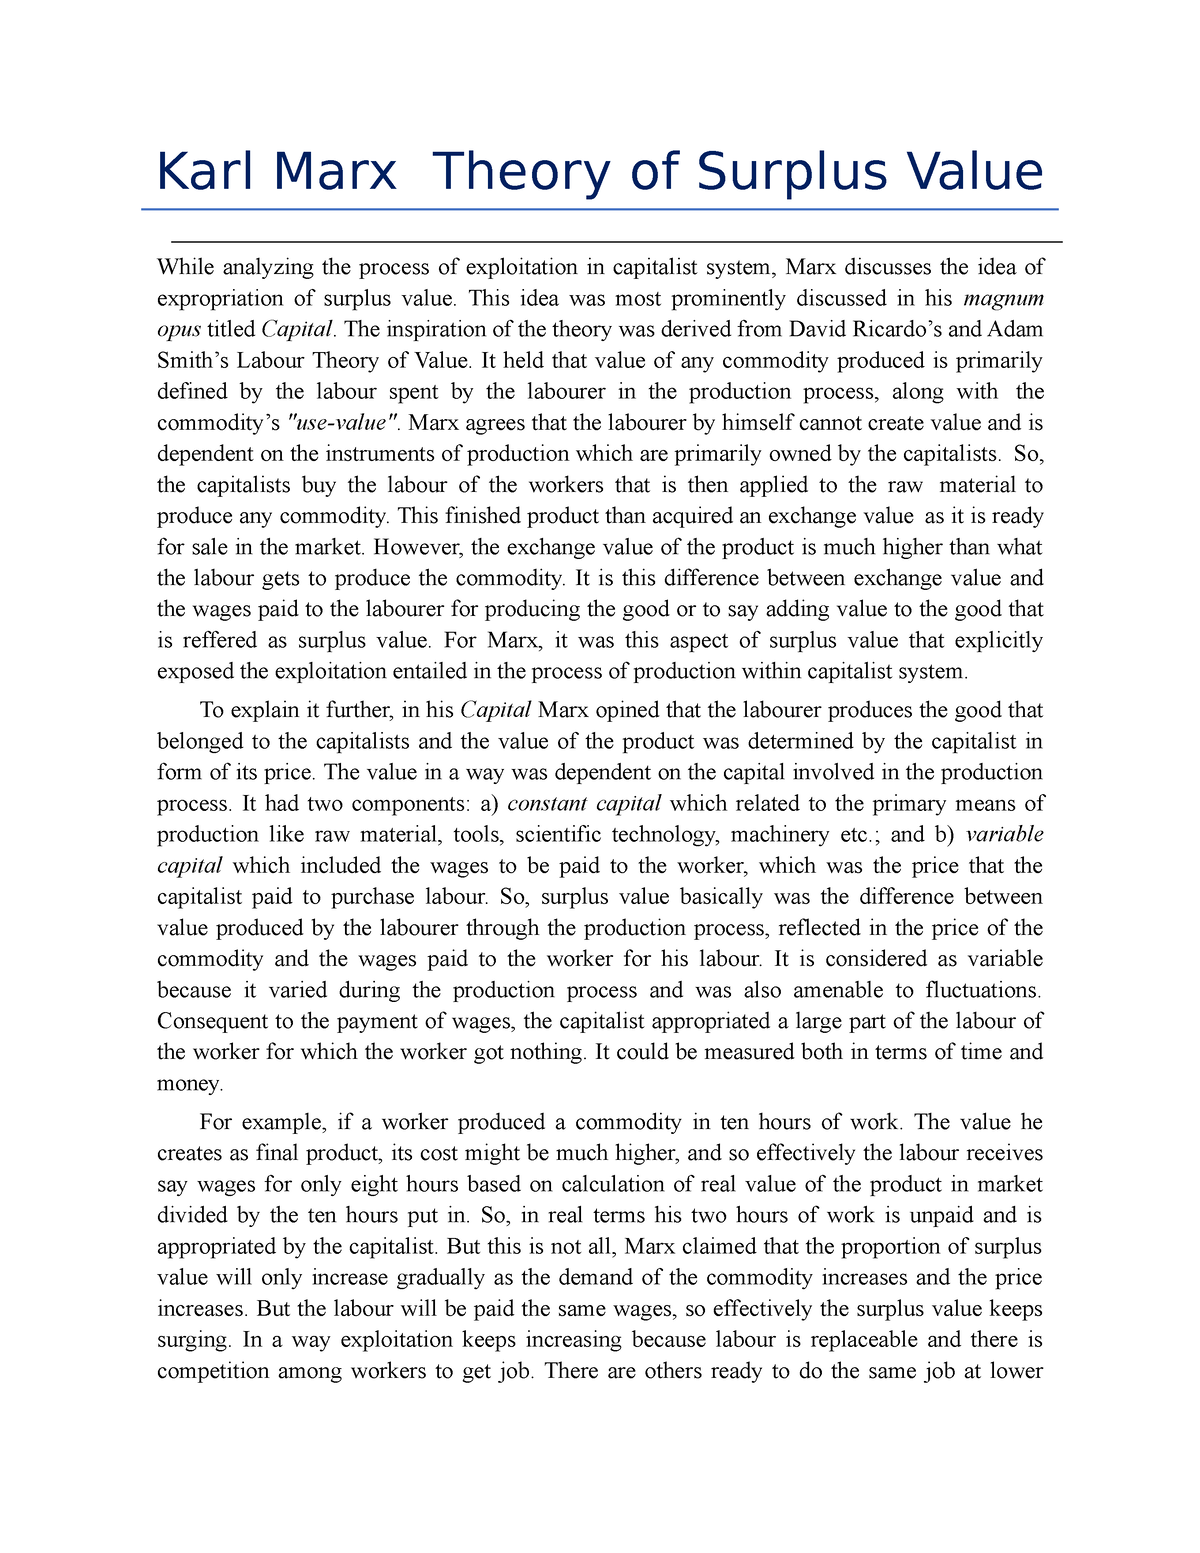 essays on marx's theory of value